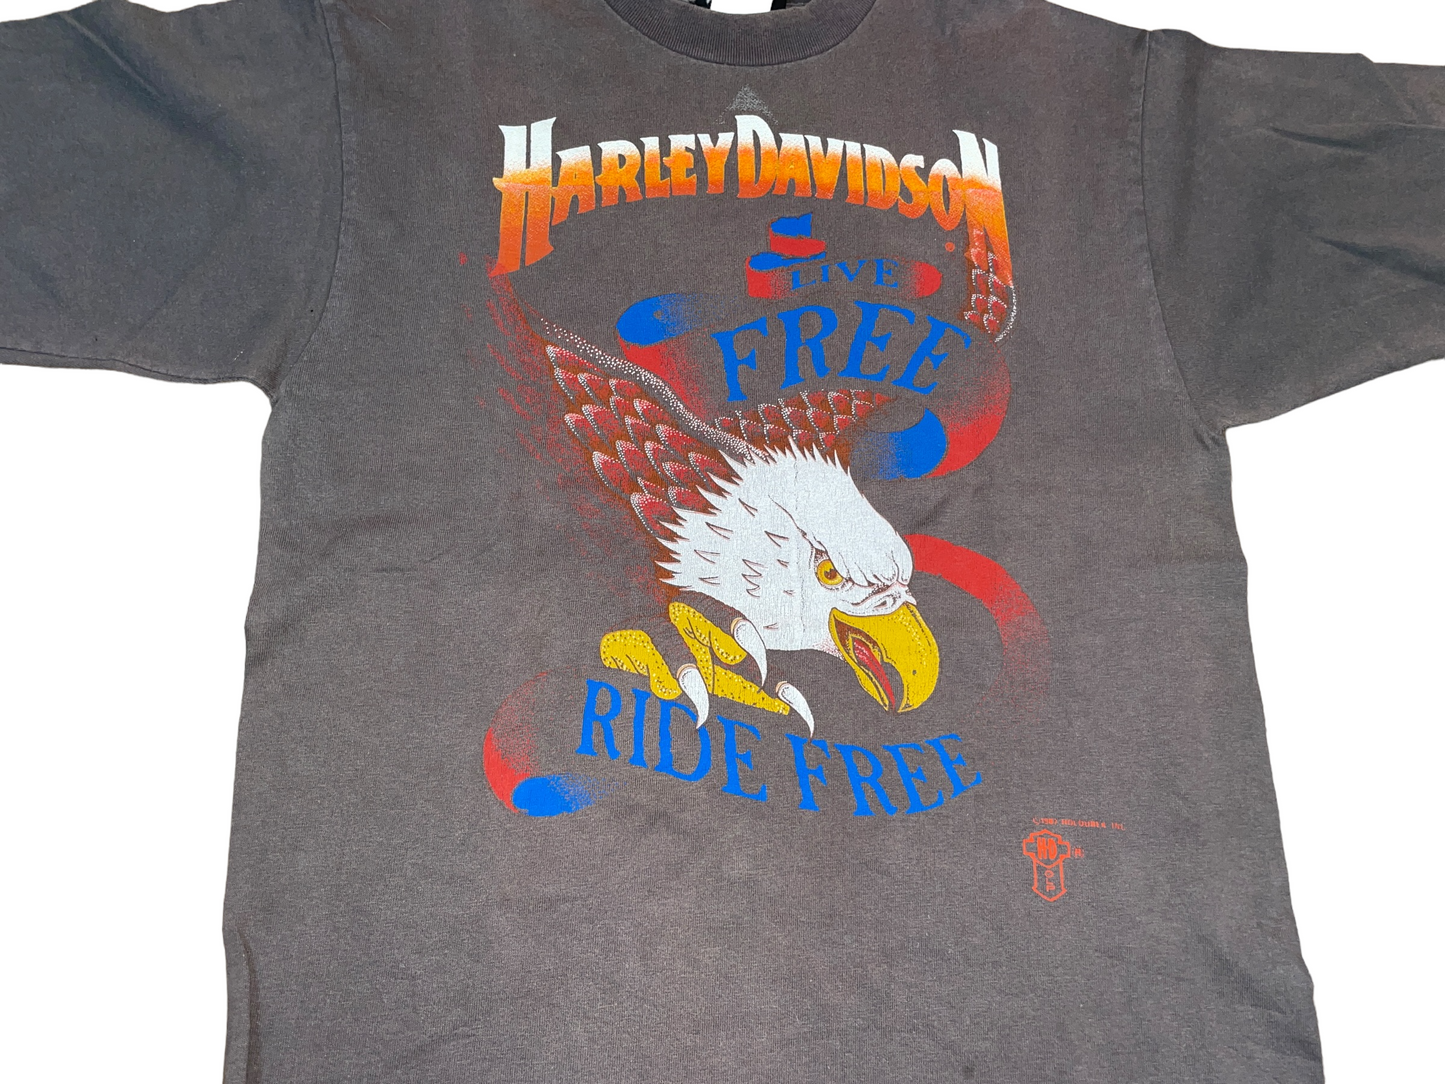 Vintage 1987 Harley Davidson Motorcycles Live Free Ride Free T-Shirt